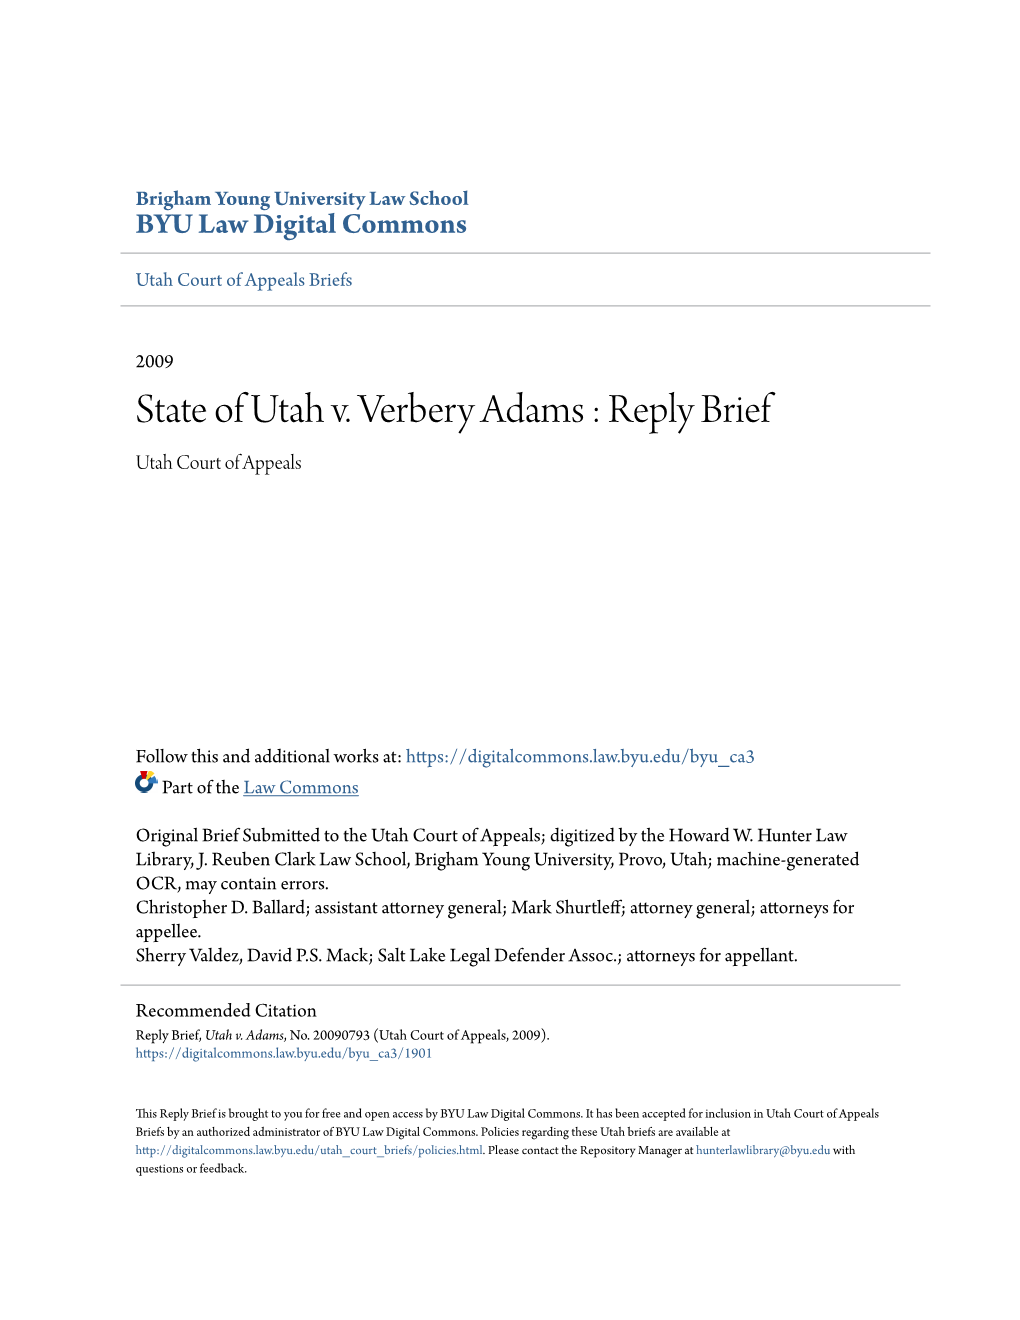 State of Utah V. Verbery Adams : Reply Brief Utah Court of Appeals